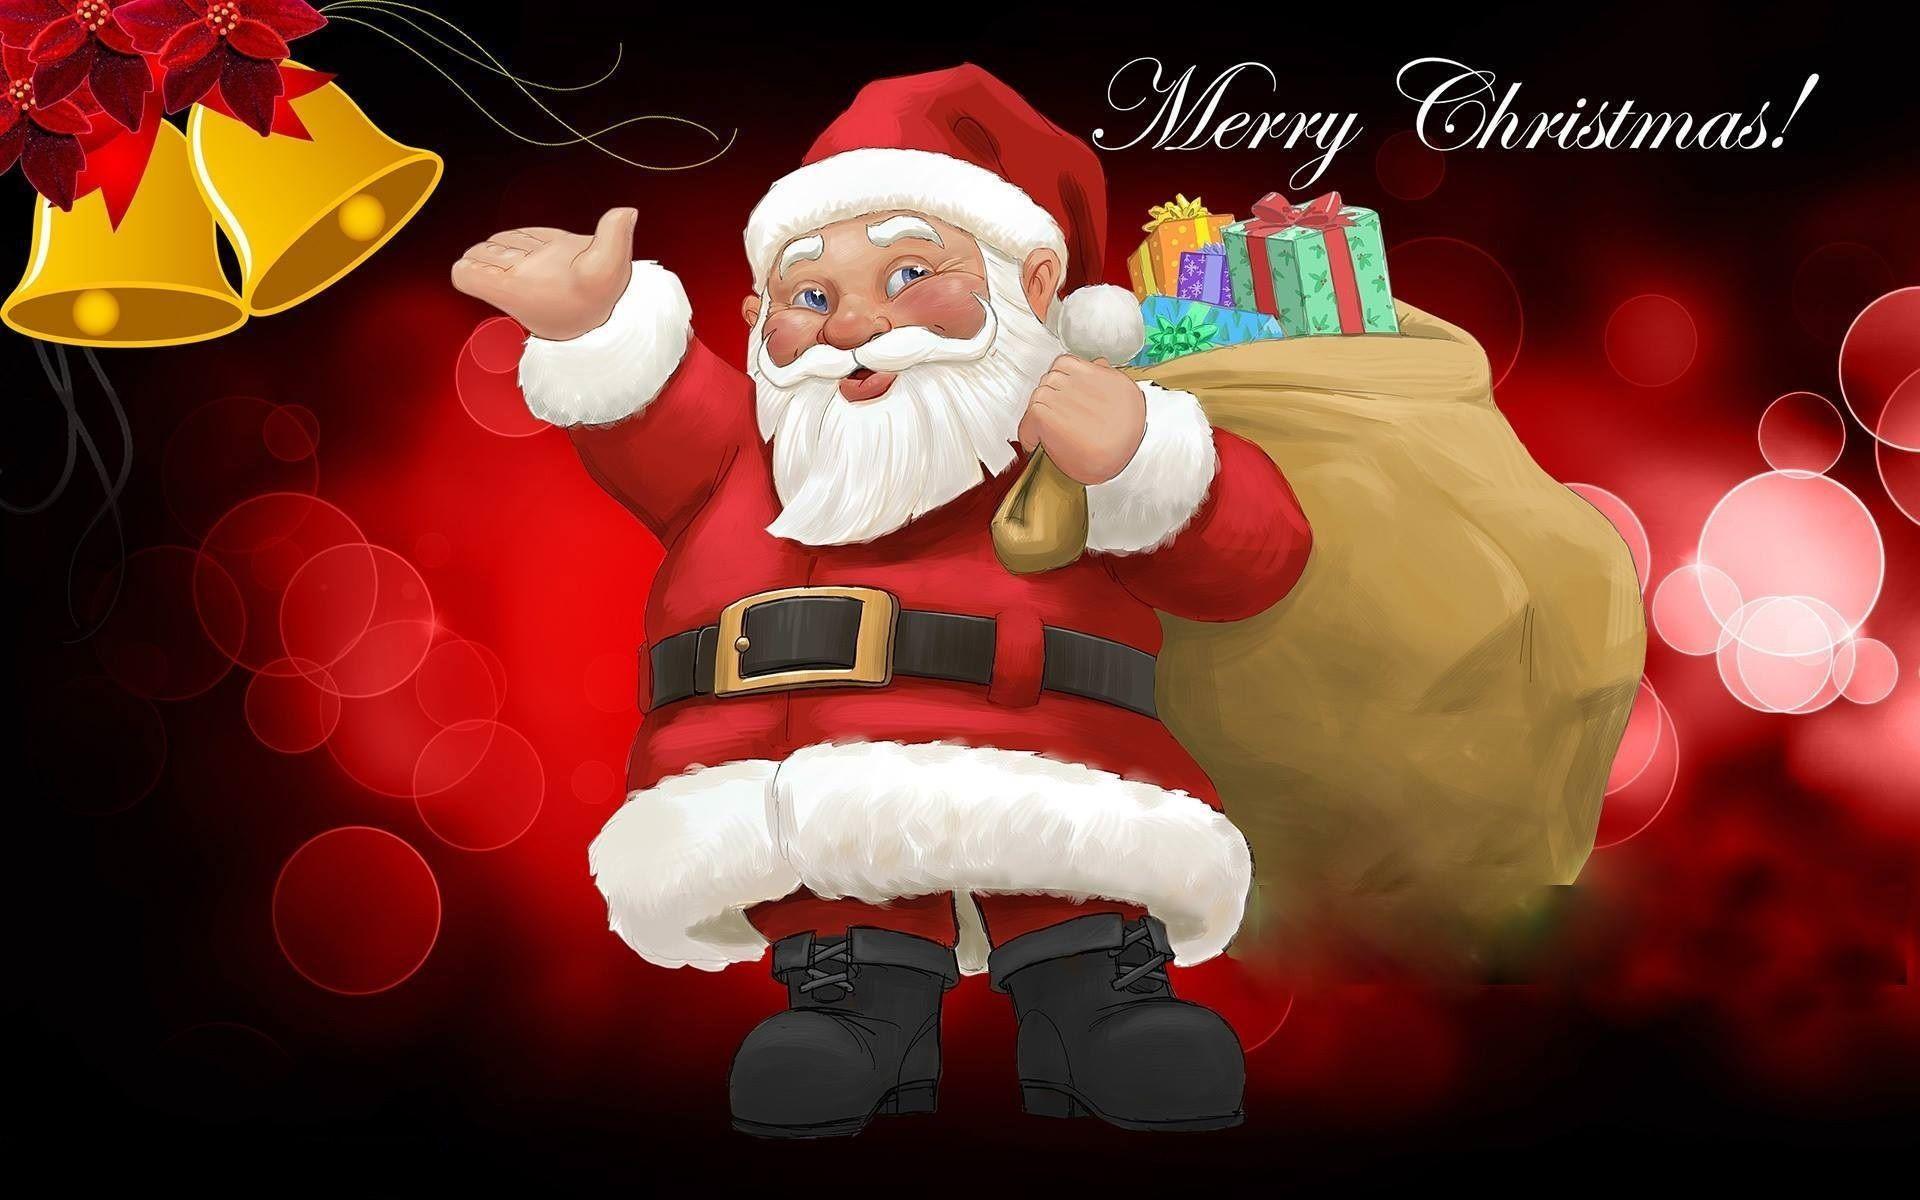 Merry Christmas Santa Claus Image 2017 HD Wallpaper